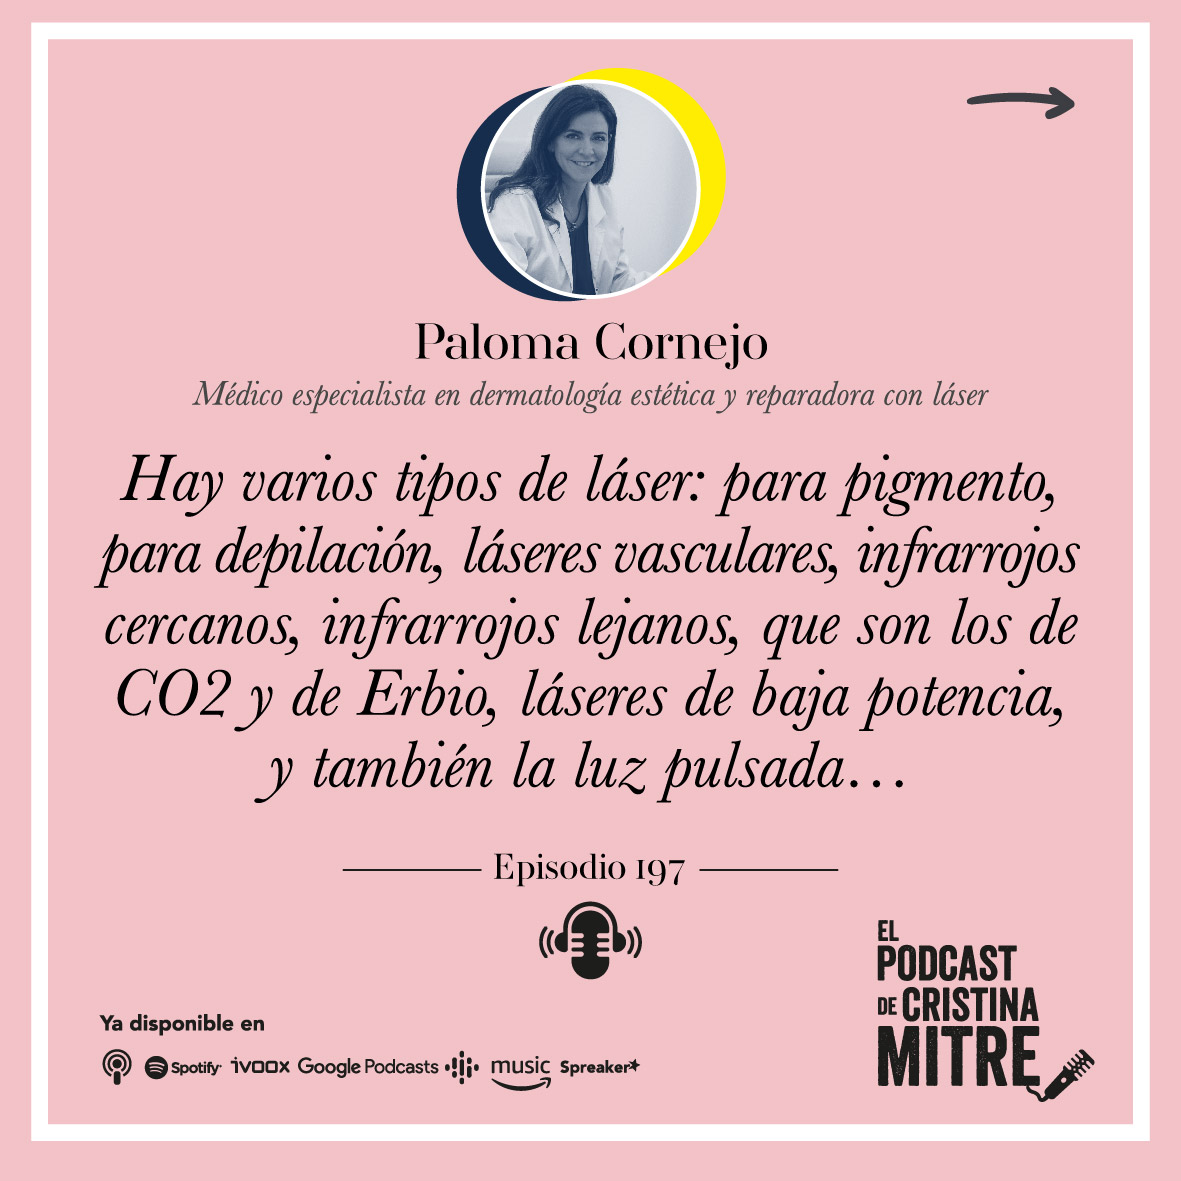 El Podcast de Cristina Mitre Paloma Cornejo Tratamiento láser